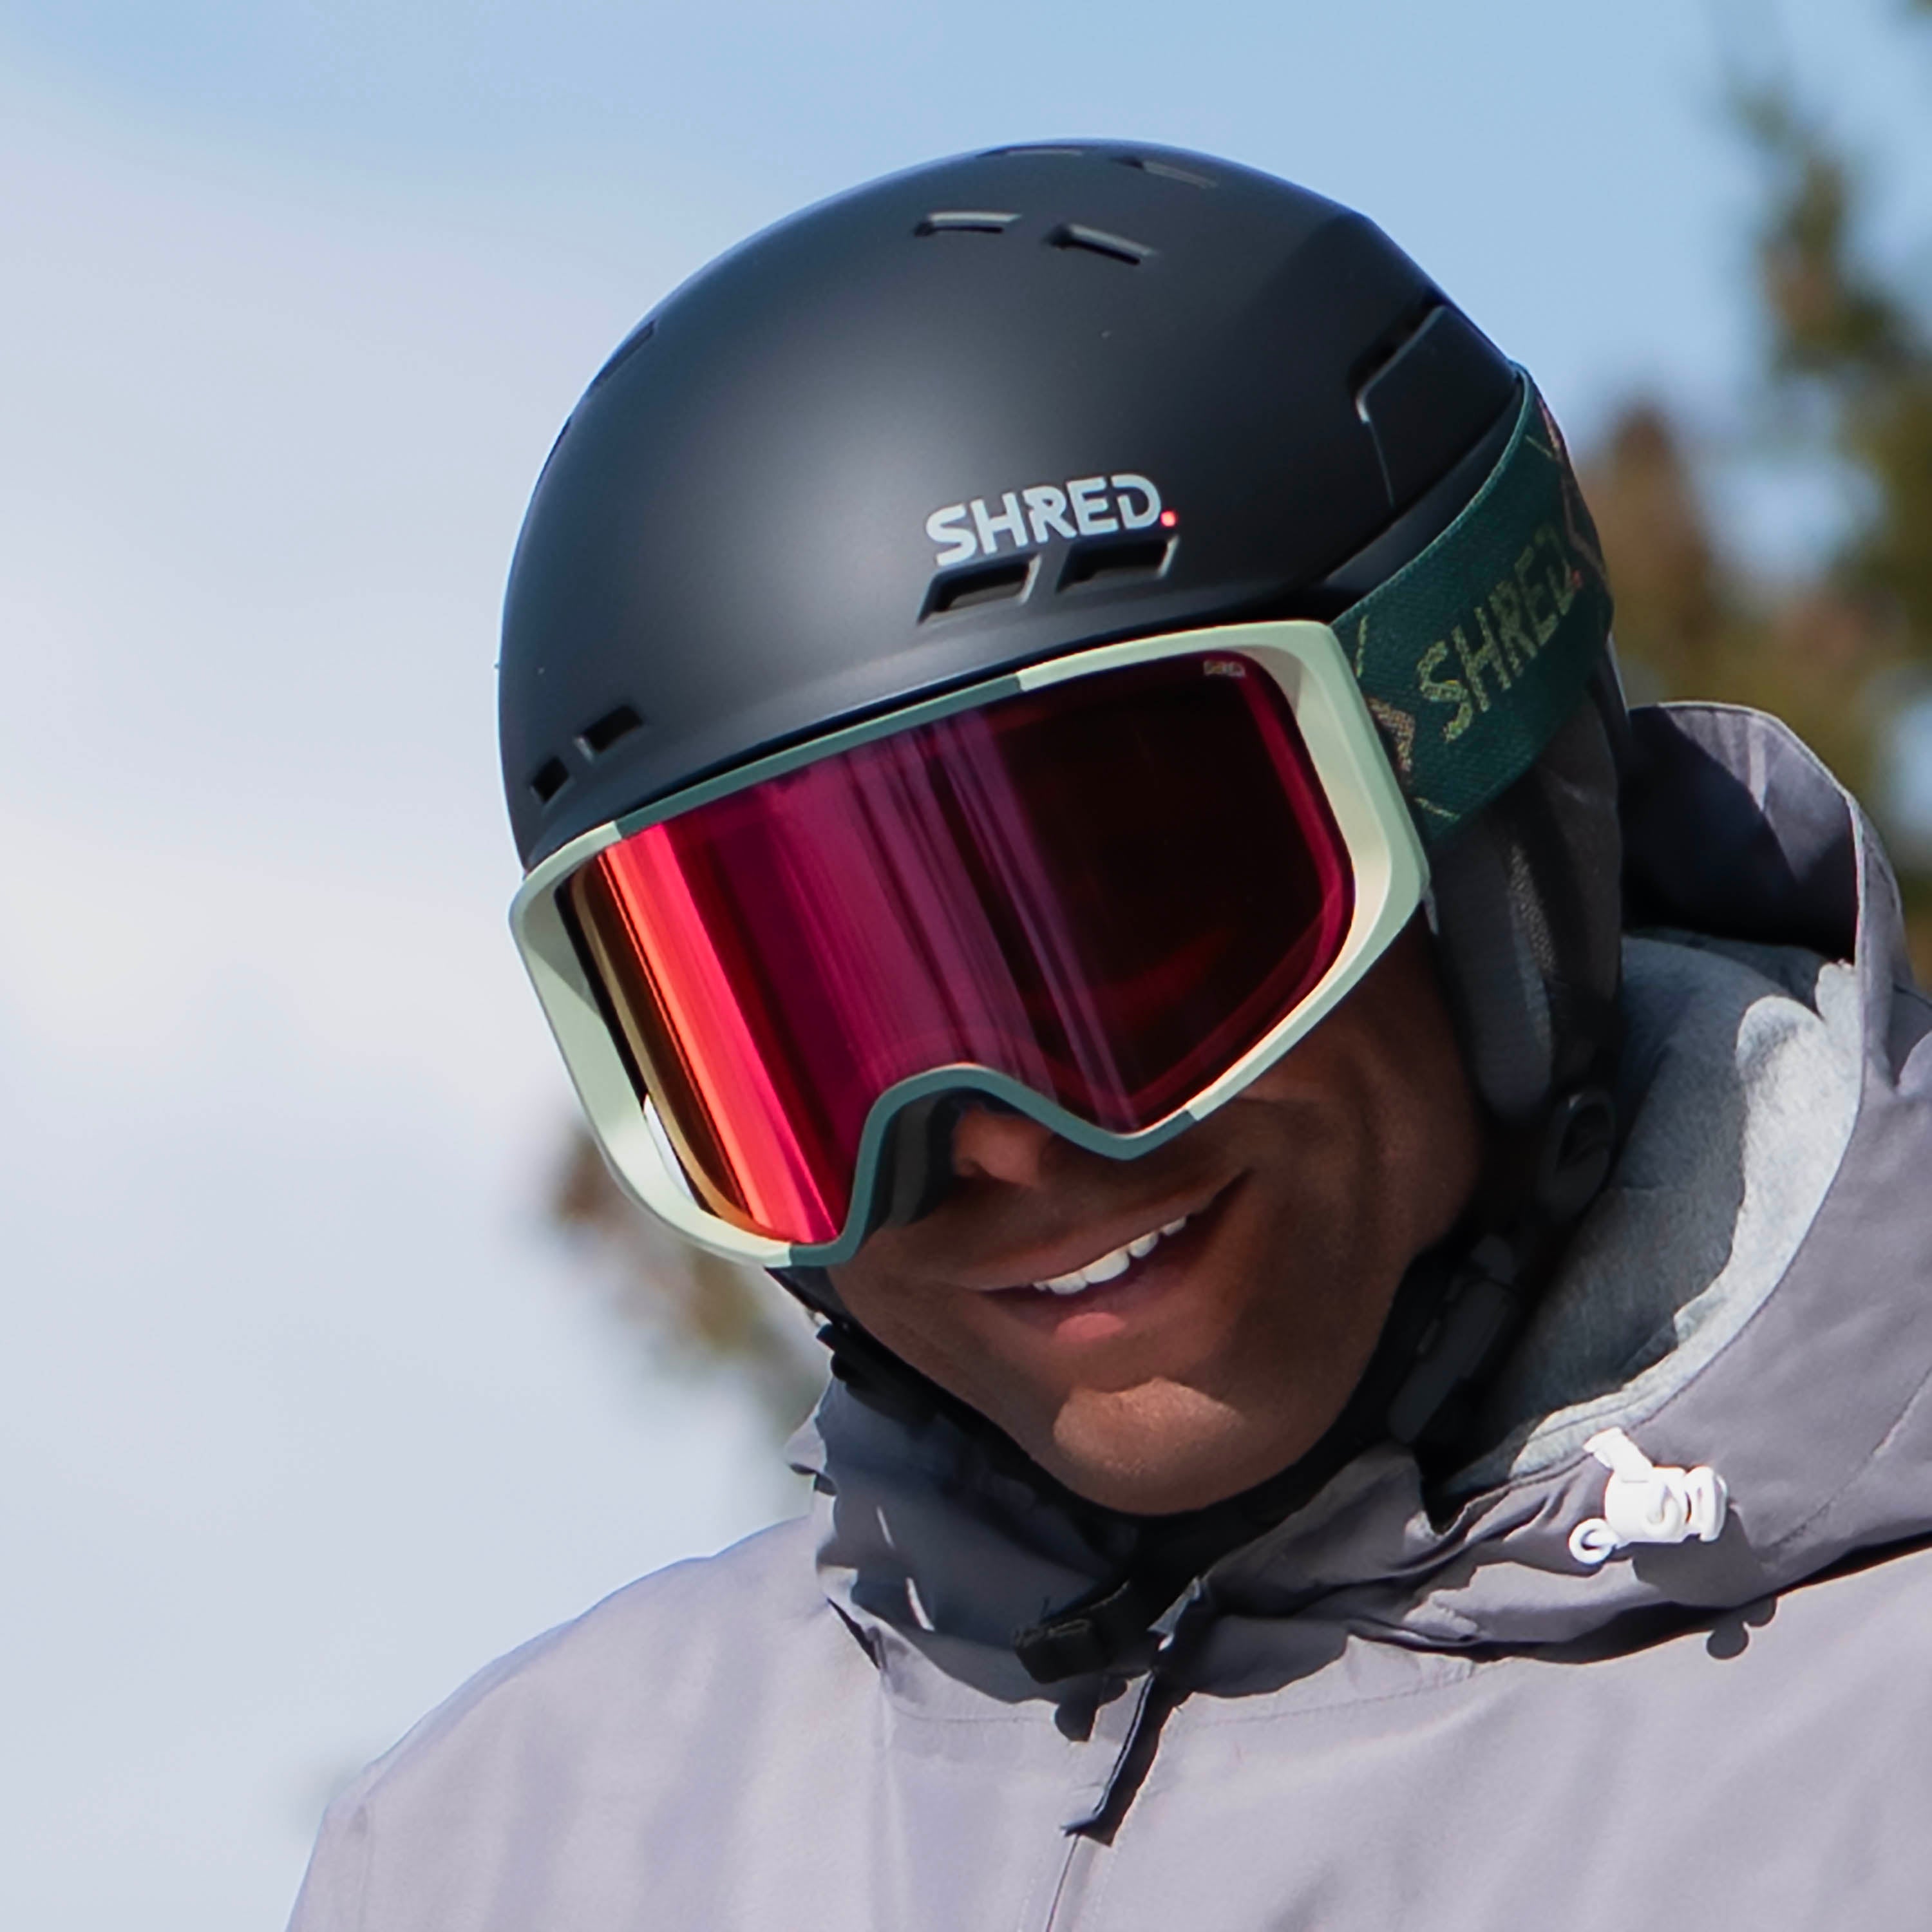 The Most High-Tech Ski Helmet We've Seen Debuts on Kickstarter